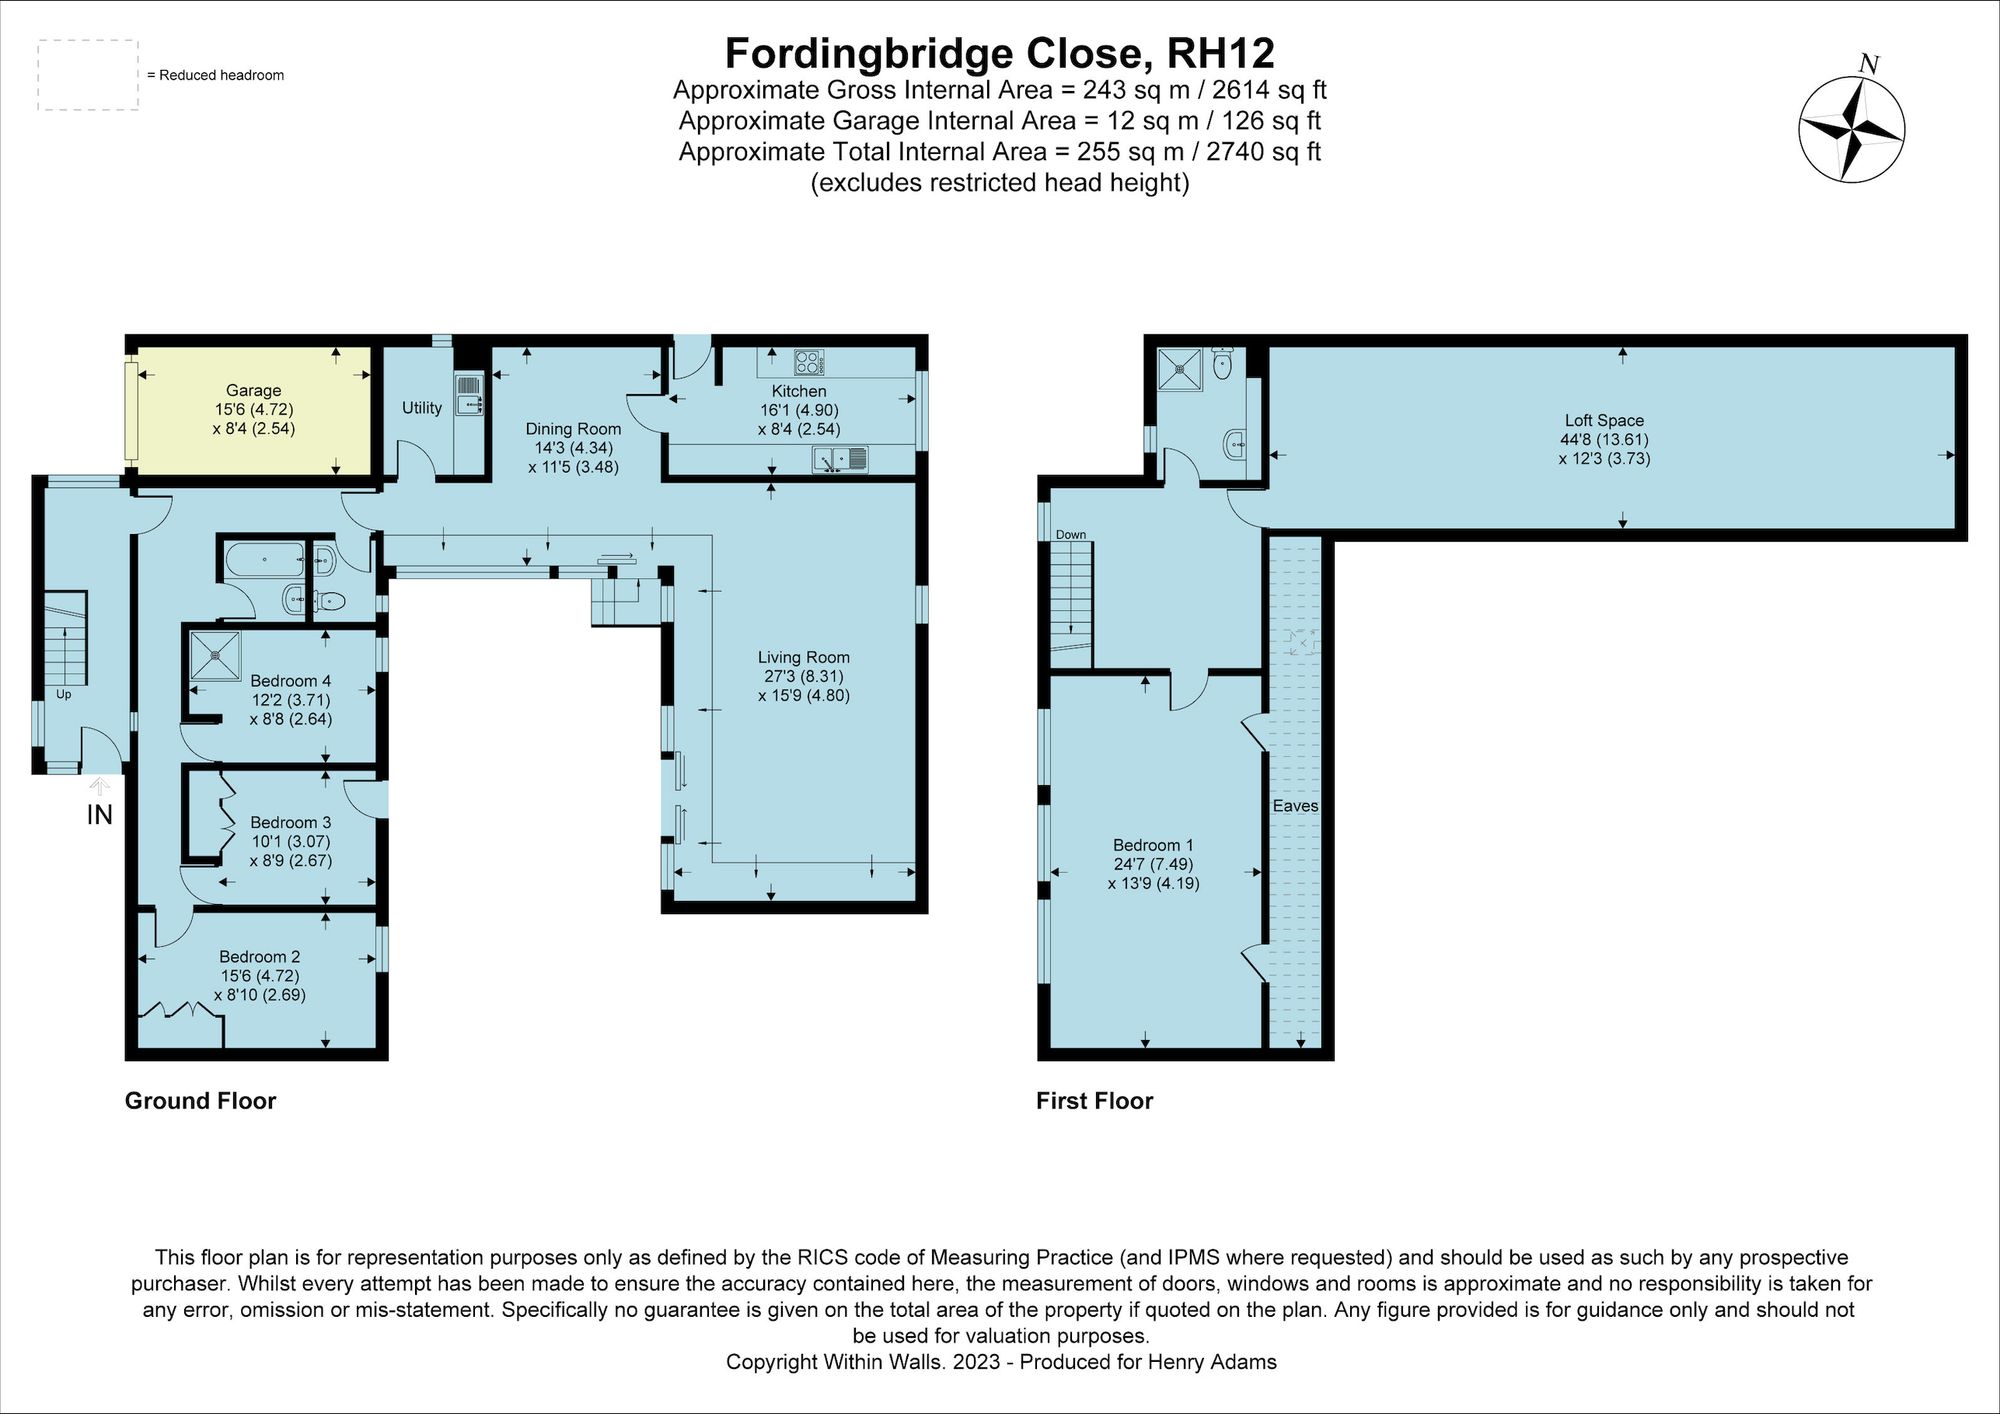 Fordingbridge Close, Horsham, RH12 floorplans